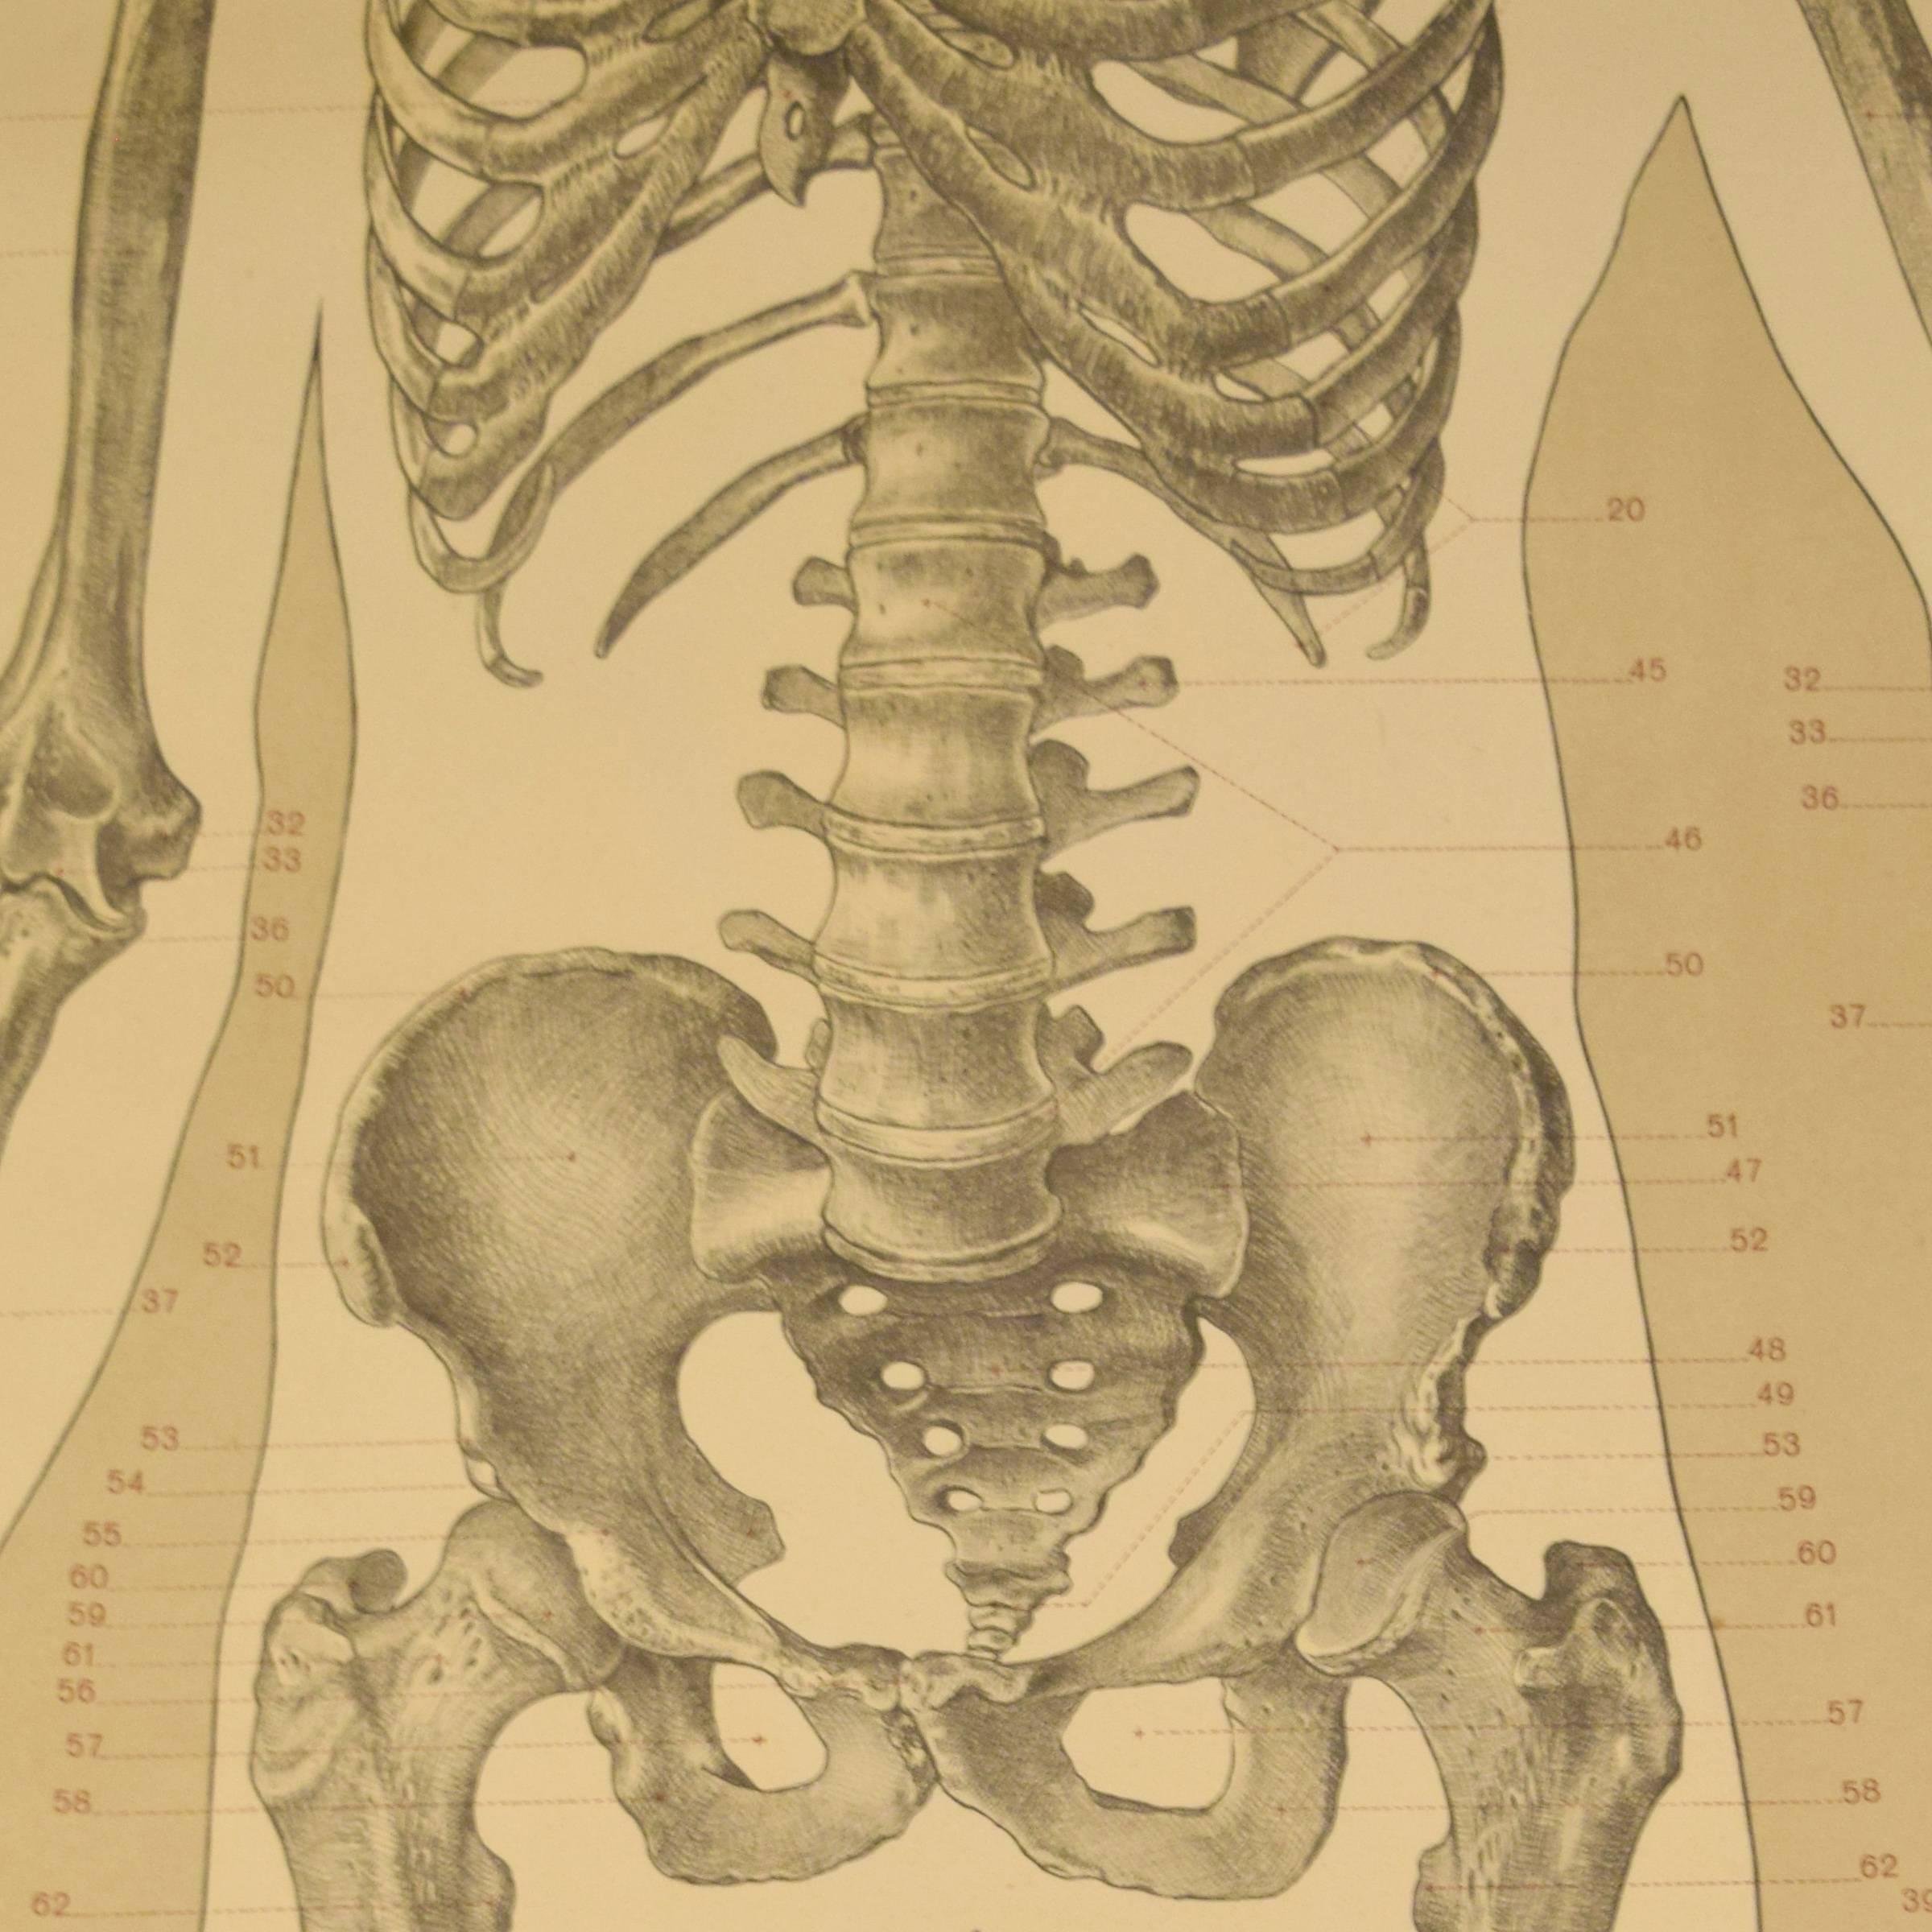 German Skeleton Poster from the Deutsche Hygiene Museum